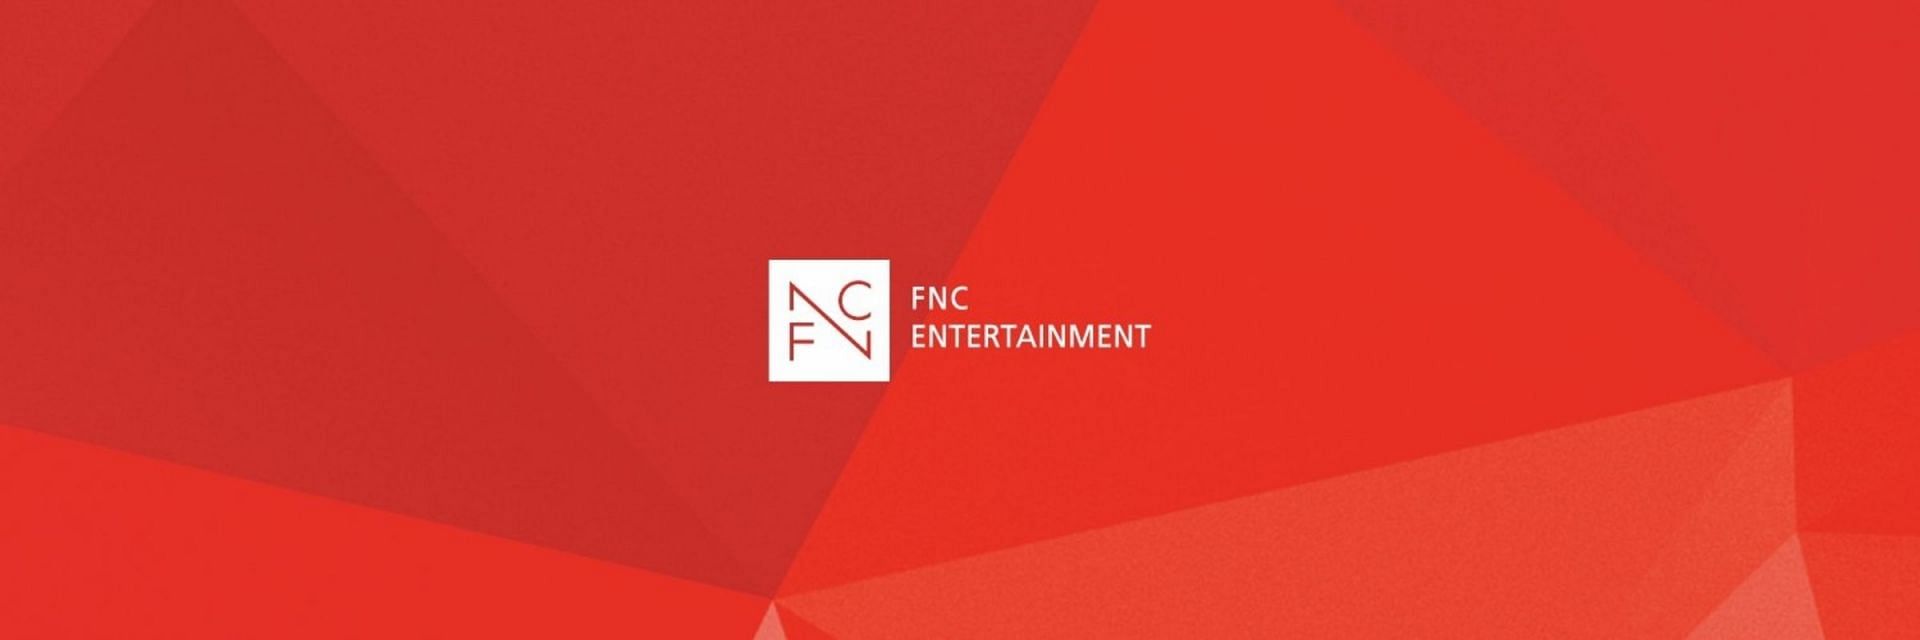 FNC Entertainment (Image via Twitter)